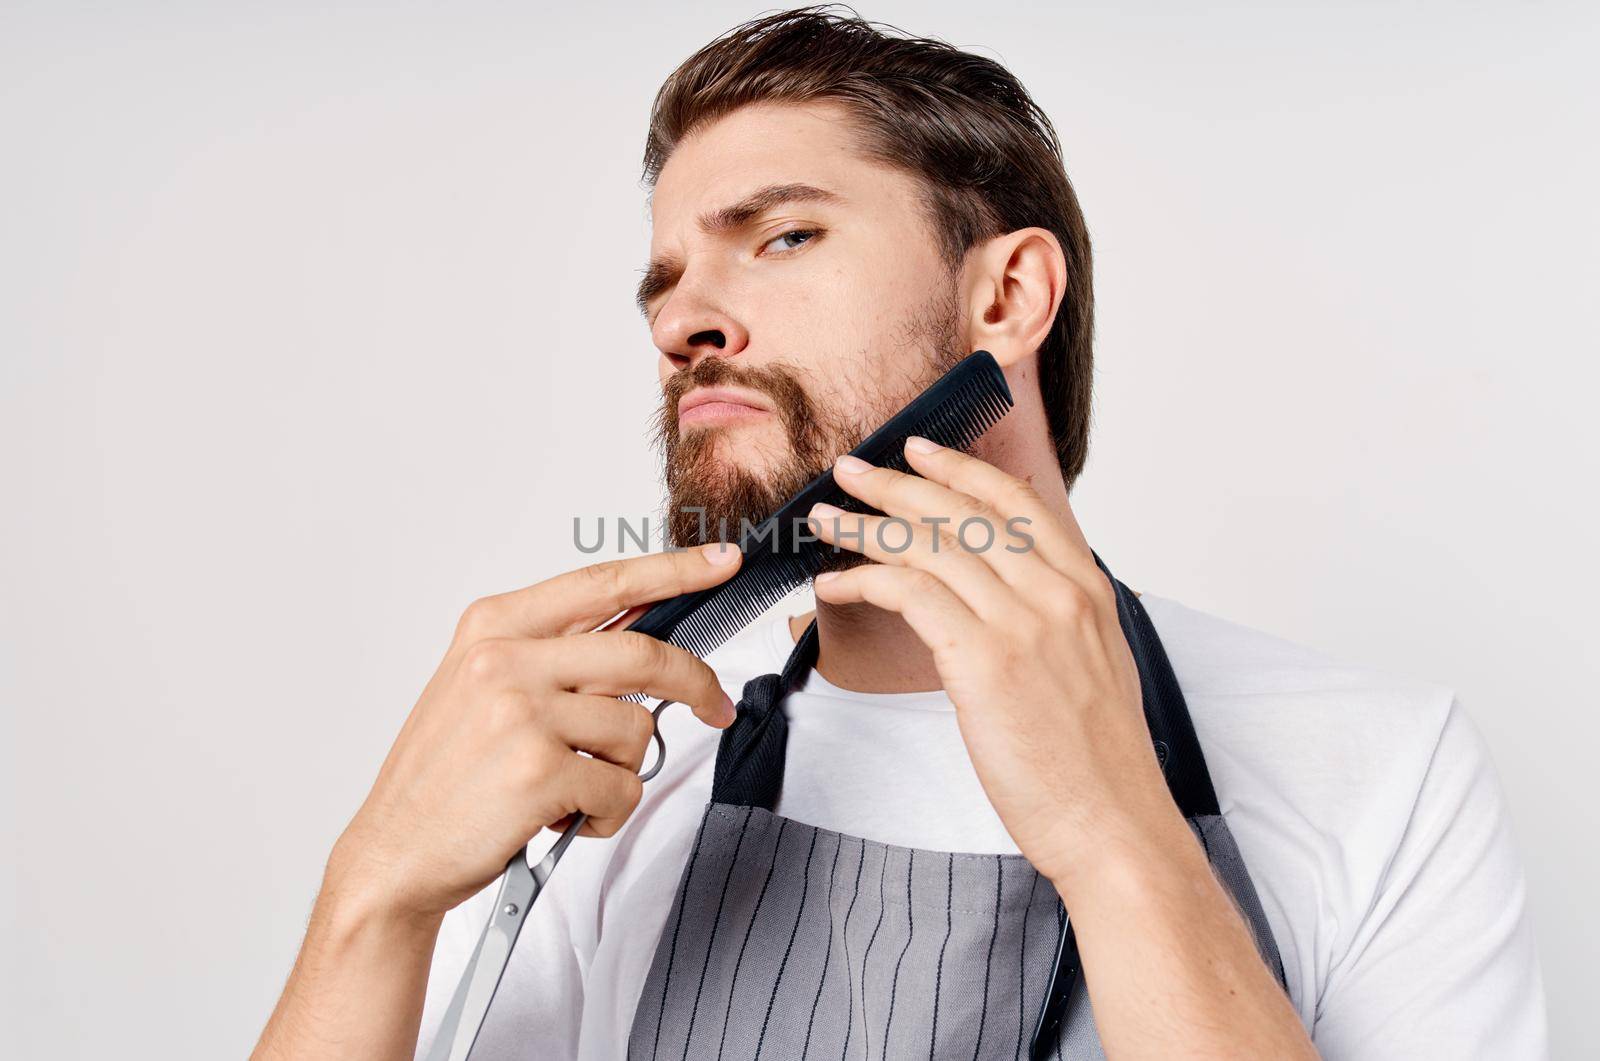 barbershop model man gray apron beard hairstyle. High quality photo